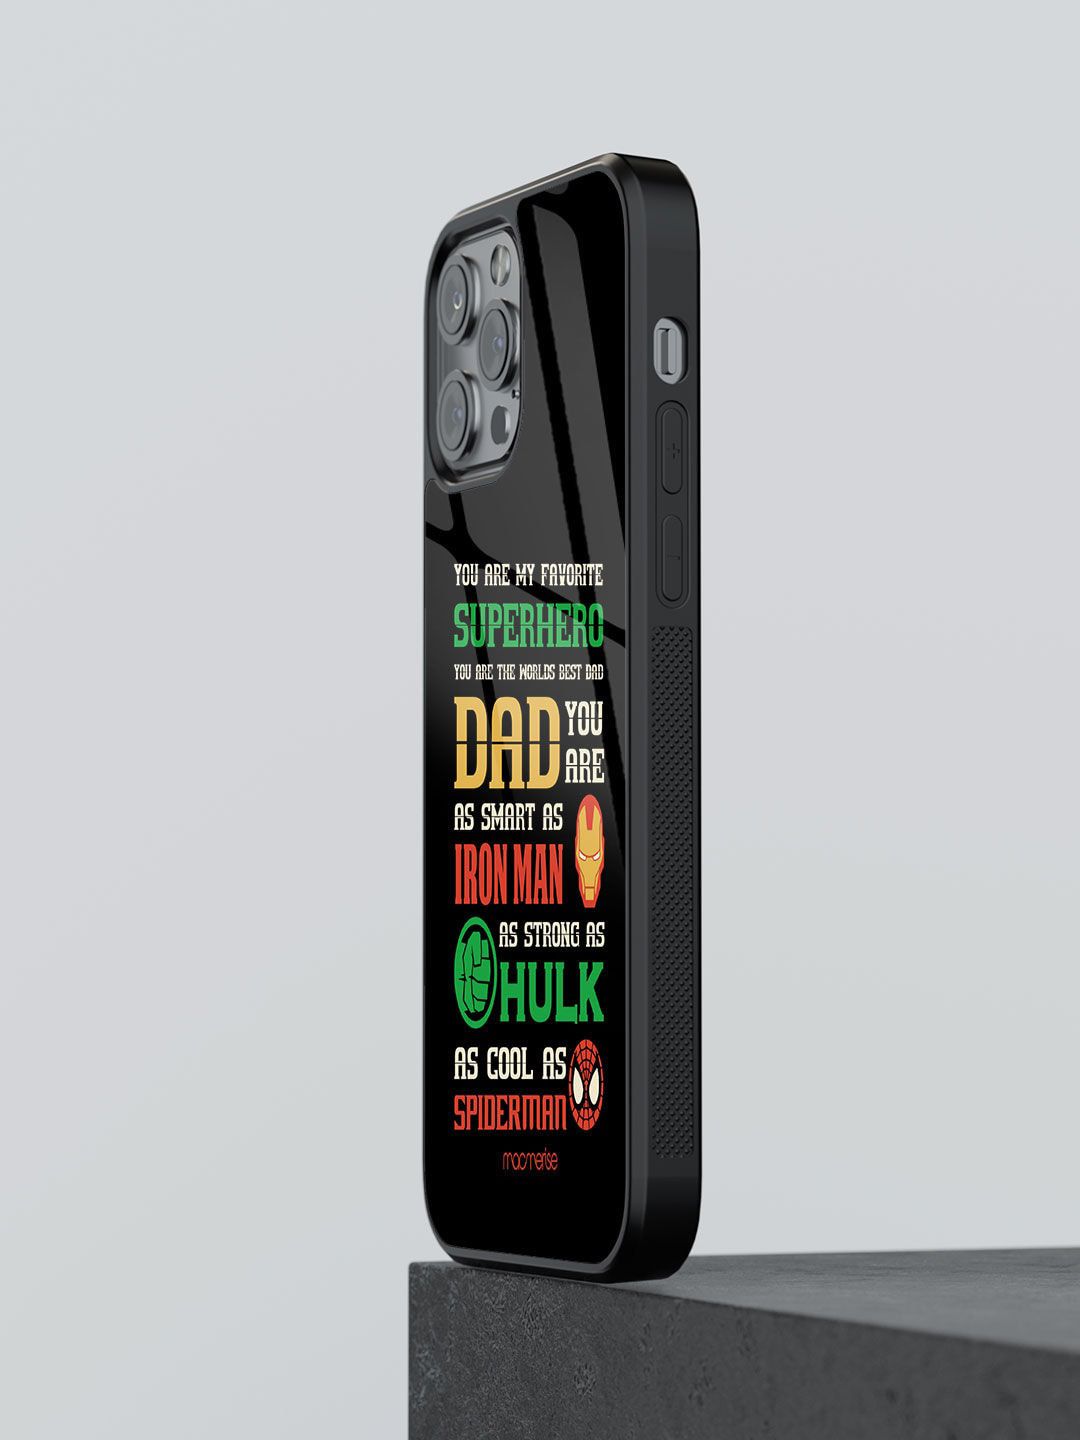 macmerise Black & Green Printed iPhone 12 Pro Max Phone Cases Price in India